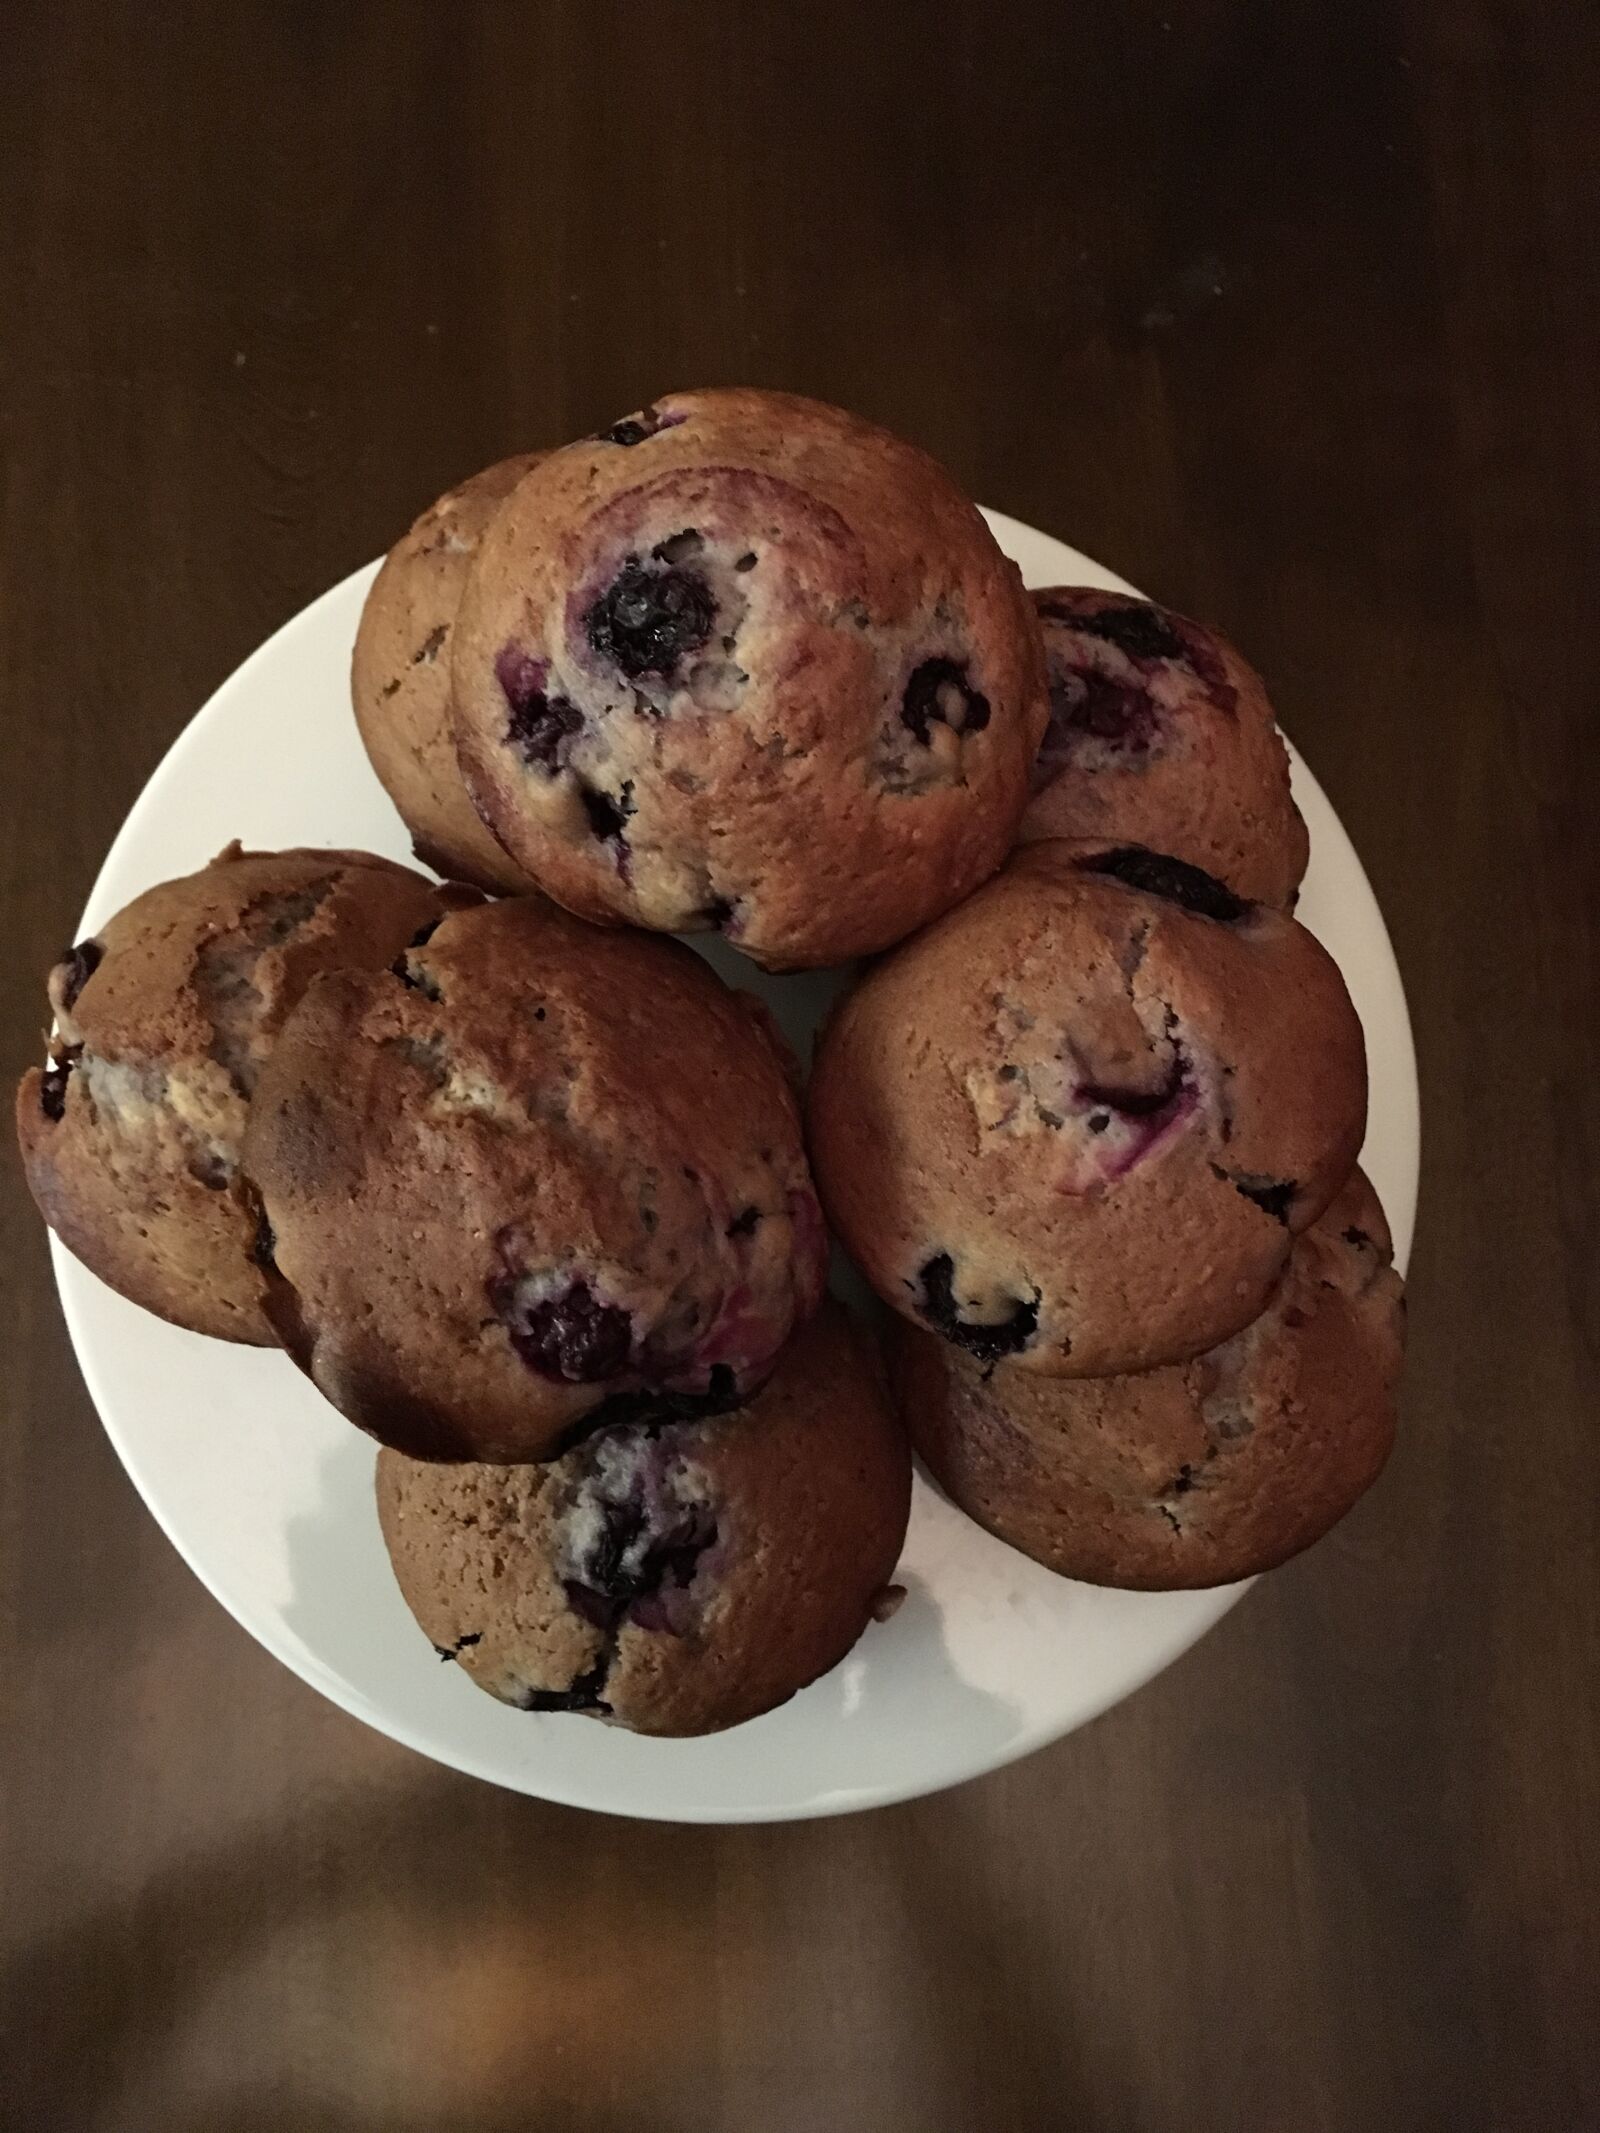 Apple iPad Pro + iPad Pro back camera 4.15mm f/2.2 sample photo. Muffins, blueberry muffins, breakfast photography